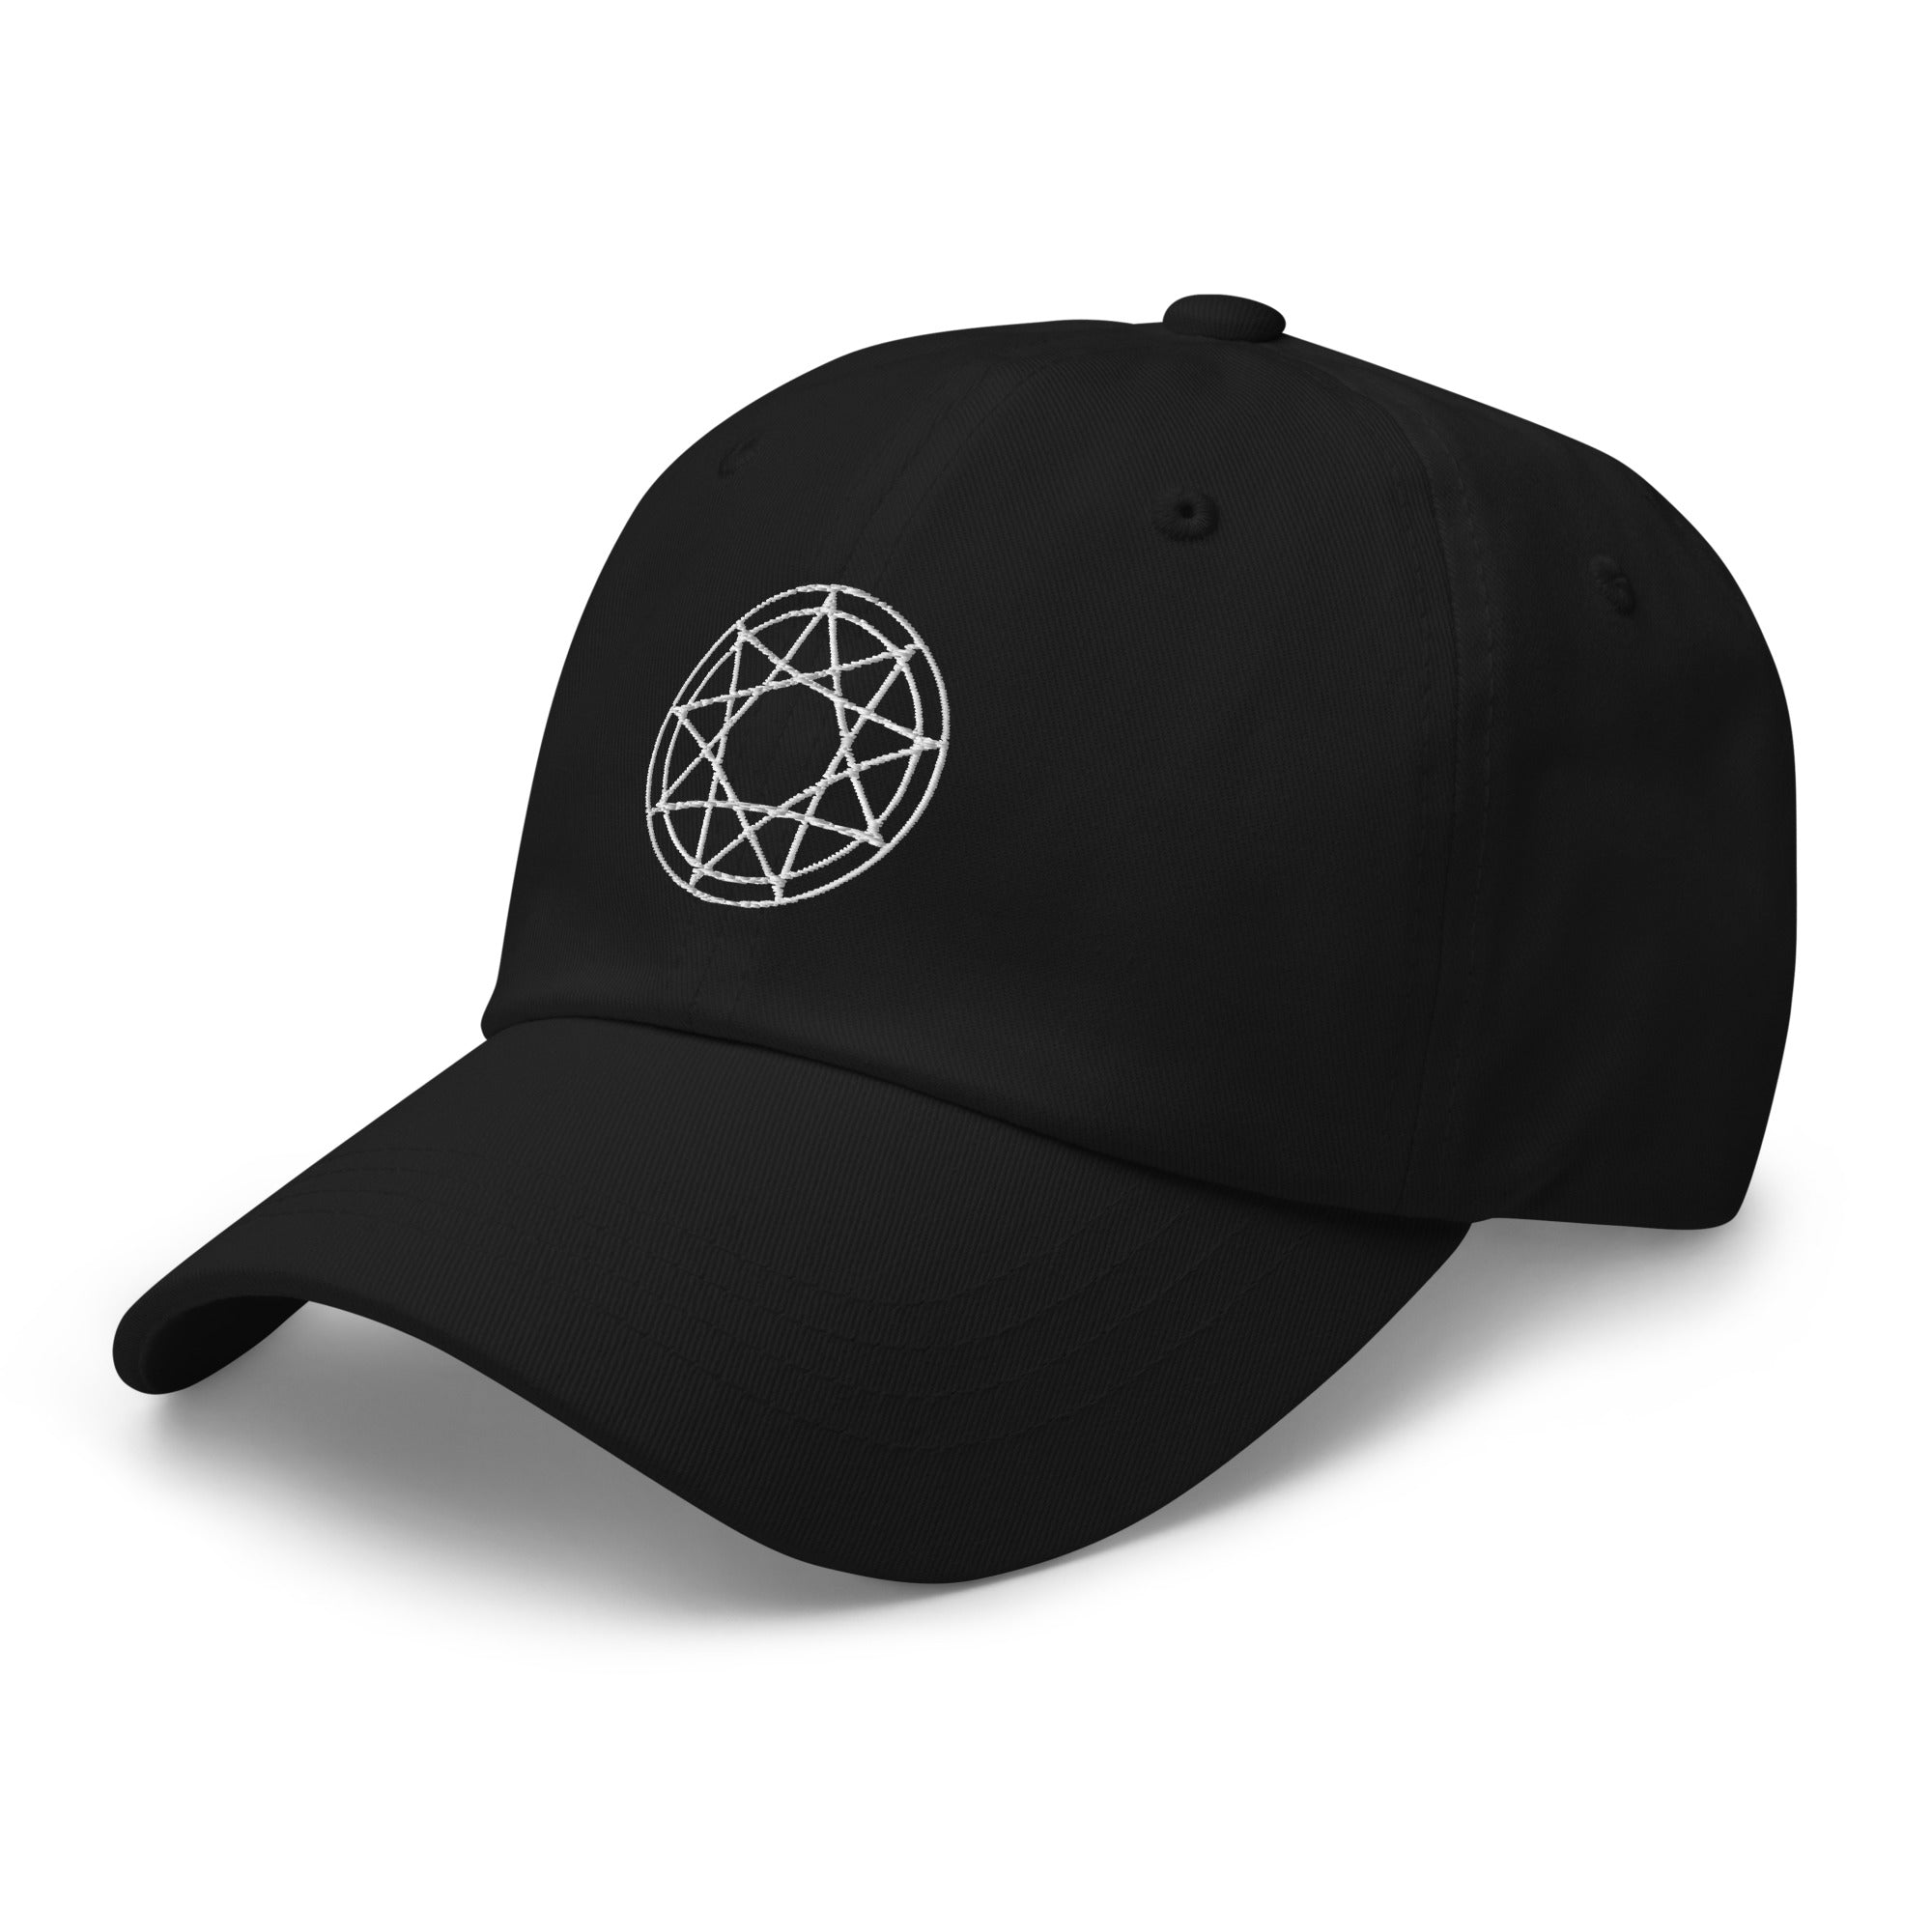 9 Point Star Pentagram Occult Symbol Embroidered Baseball Cap Slipknot Dad hat White Thread - Edge of Life Designs